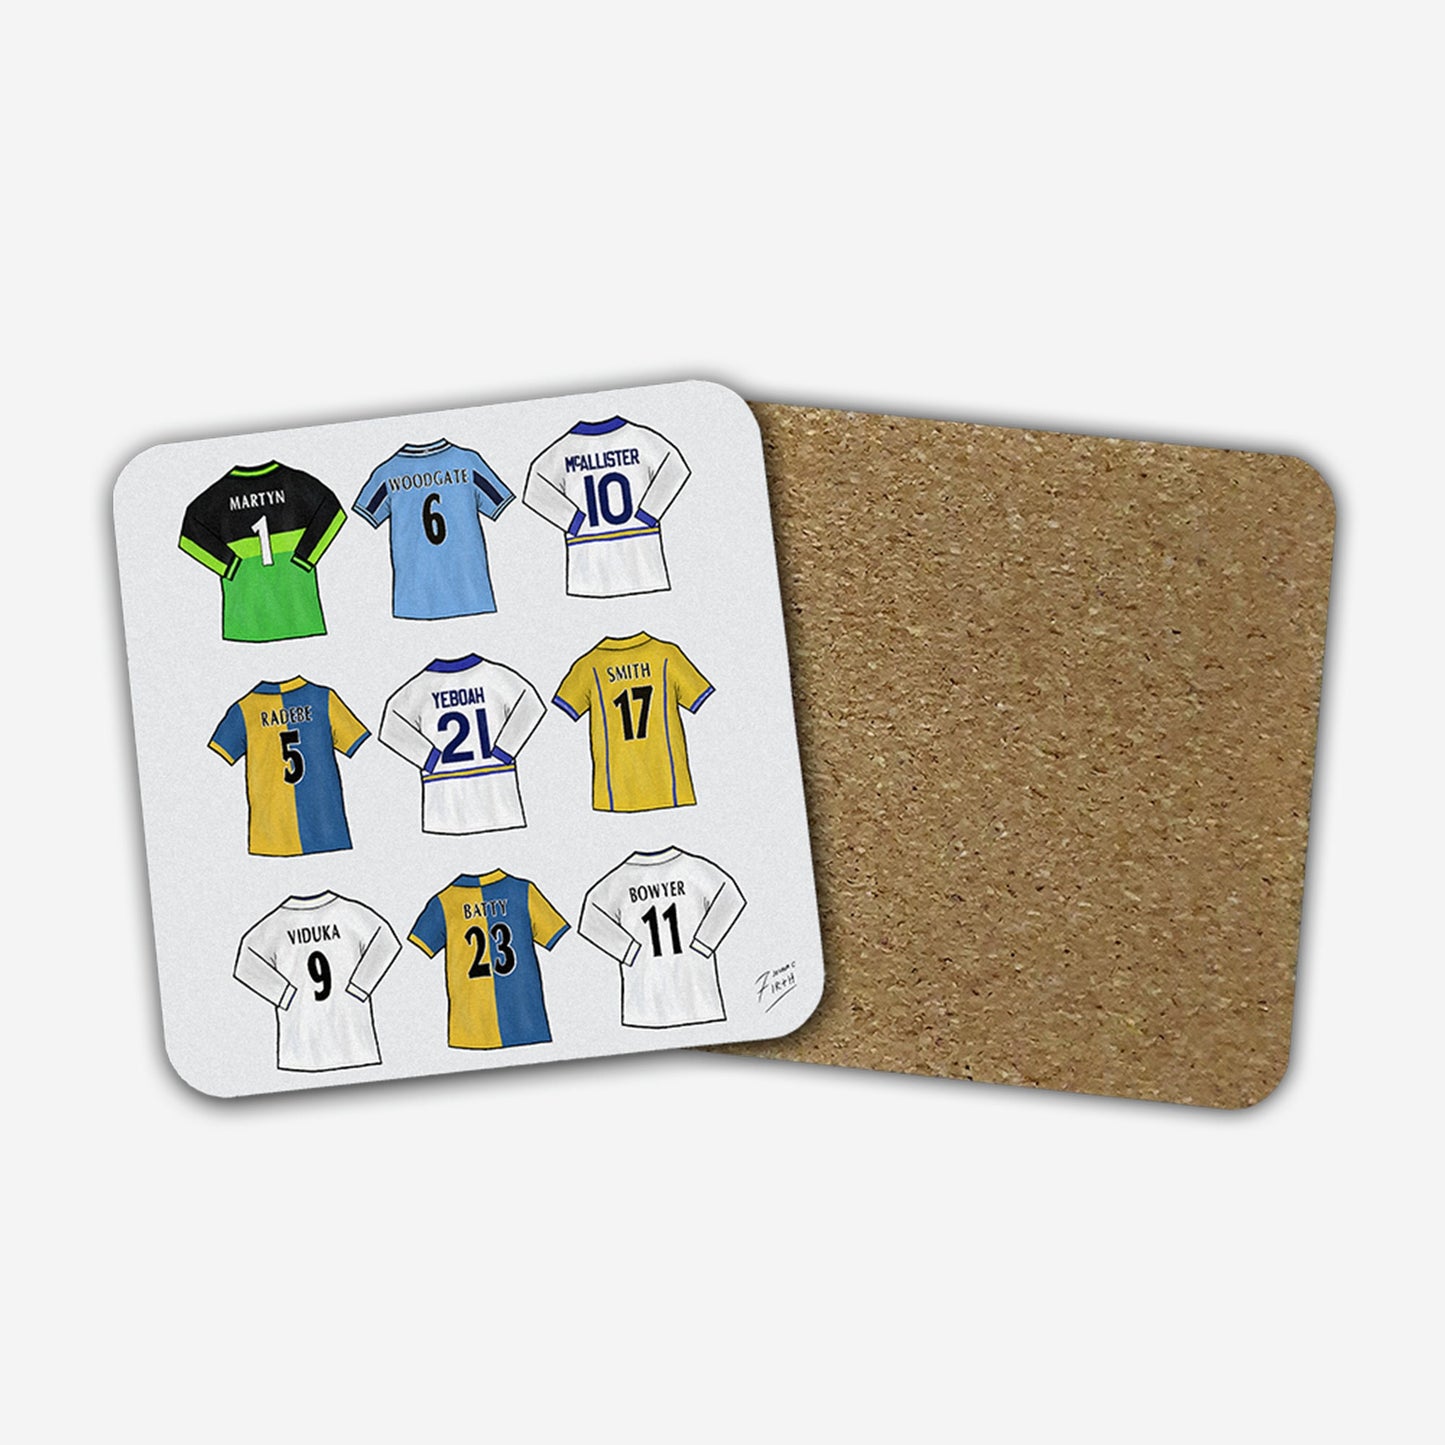 Leeds Legends 90s/00s Shirts Memorabilia Hand Sublimated Football Coaster